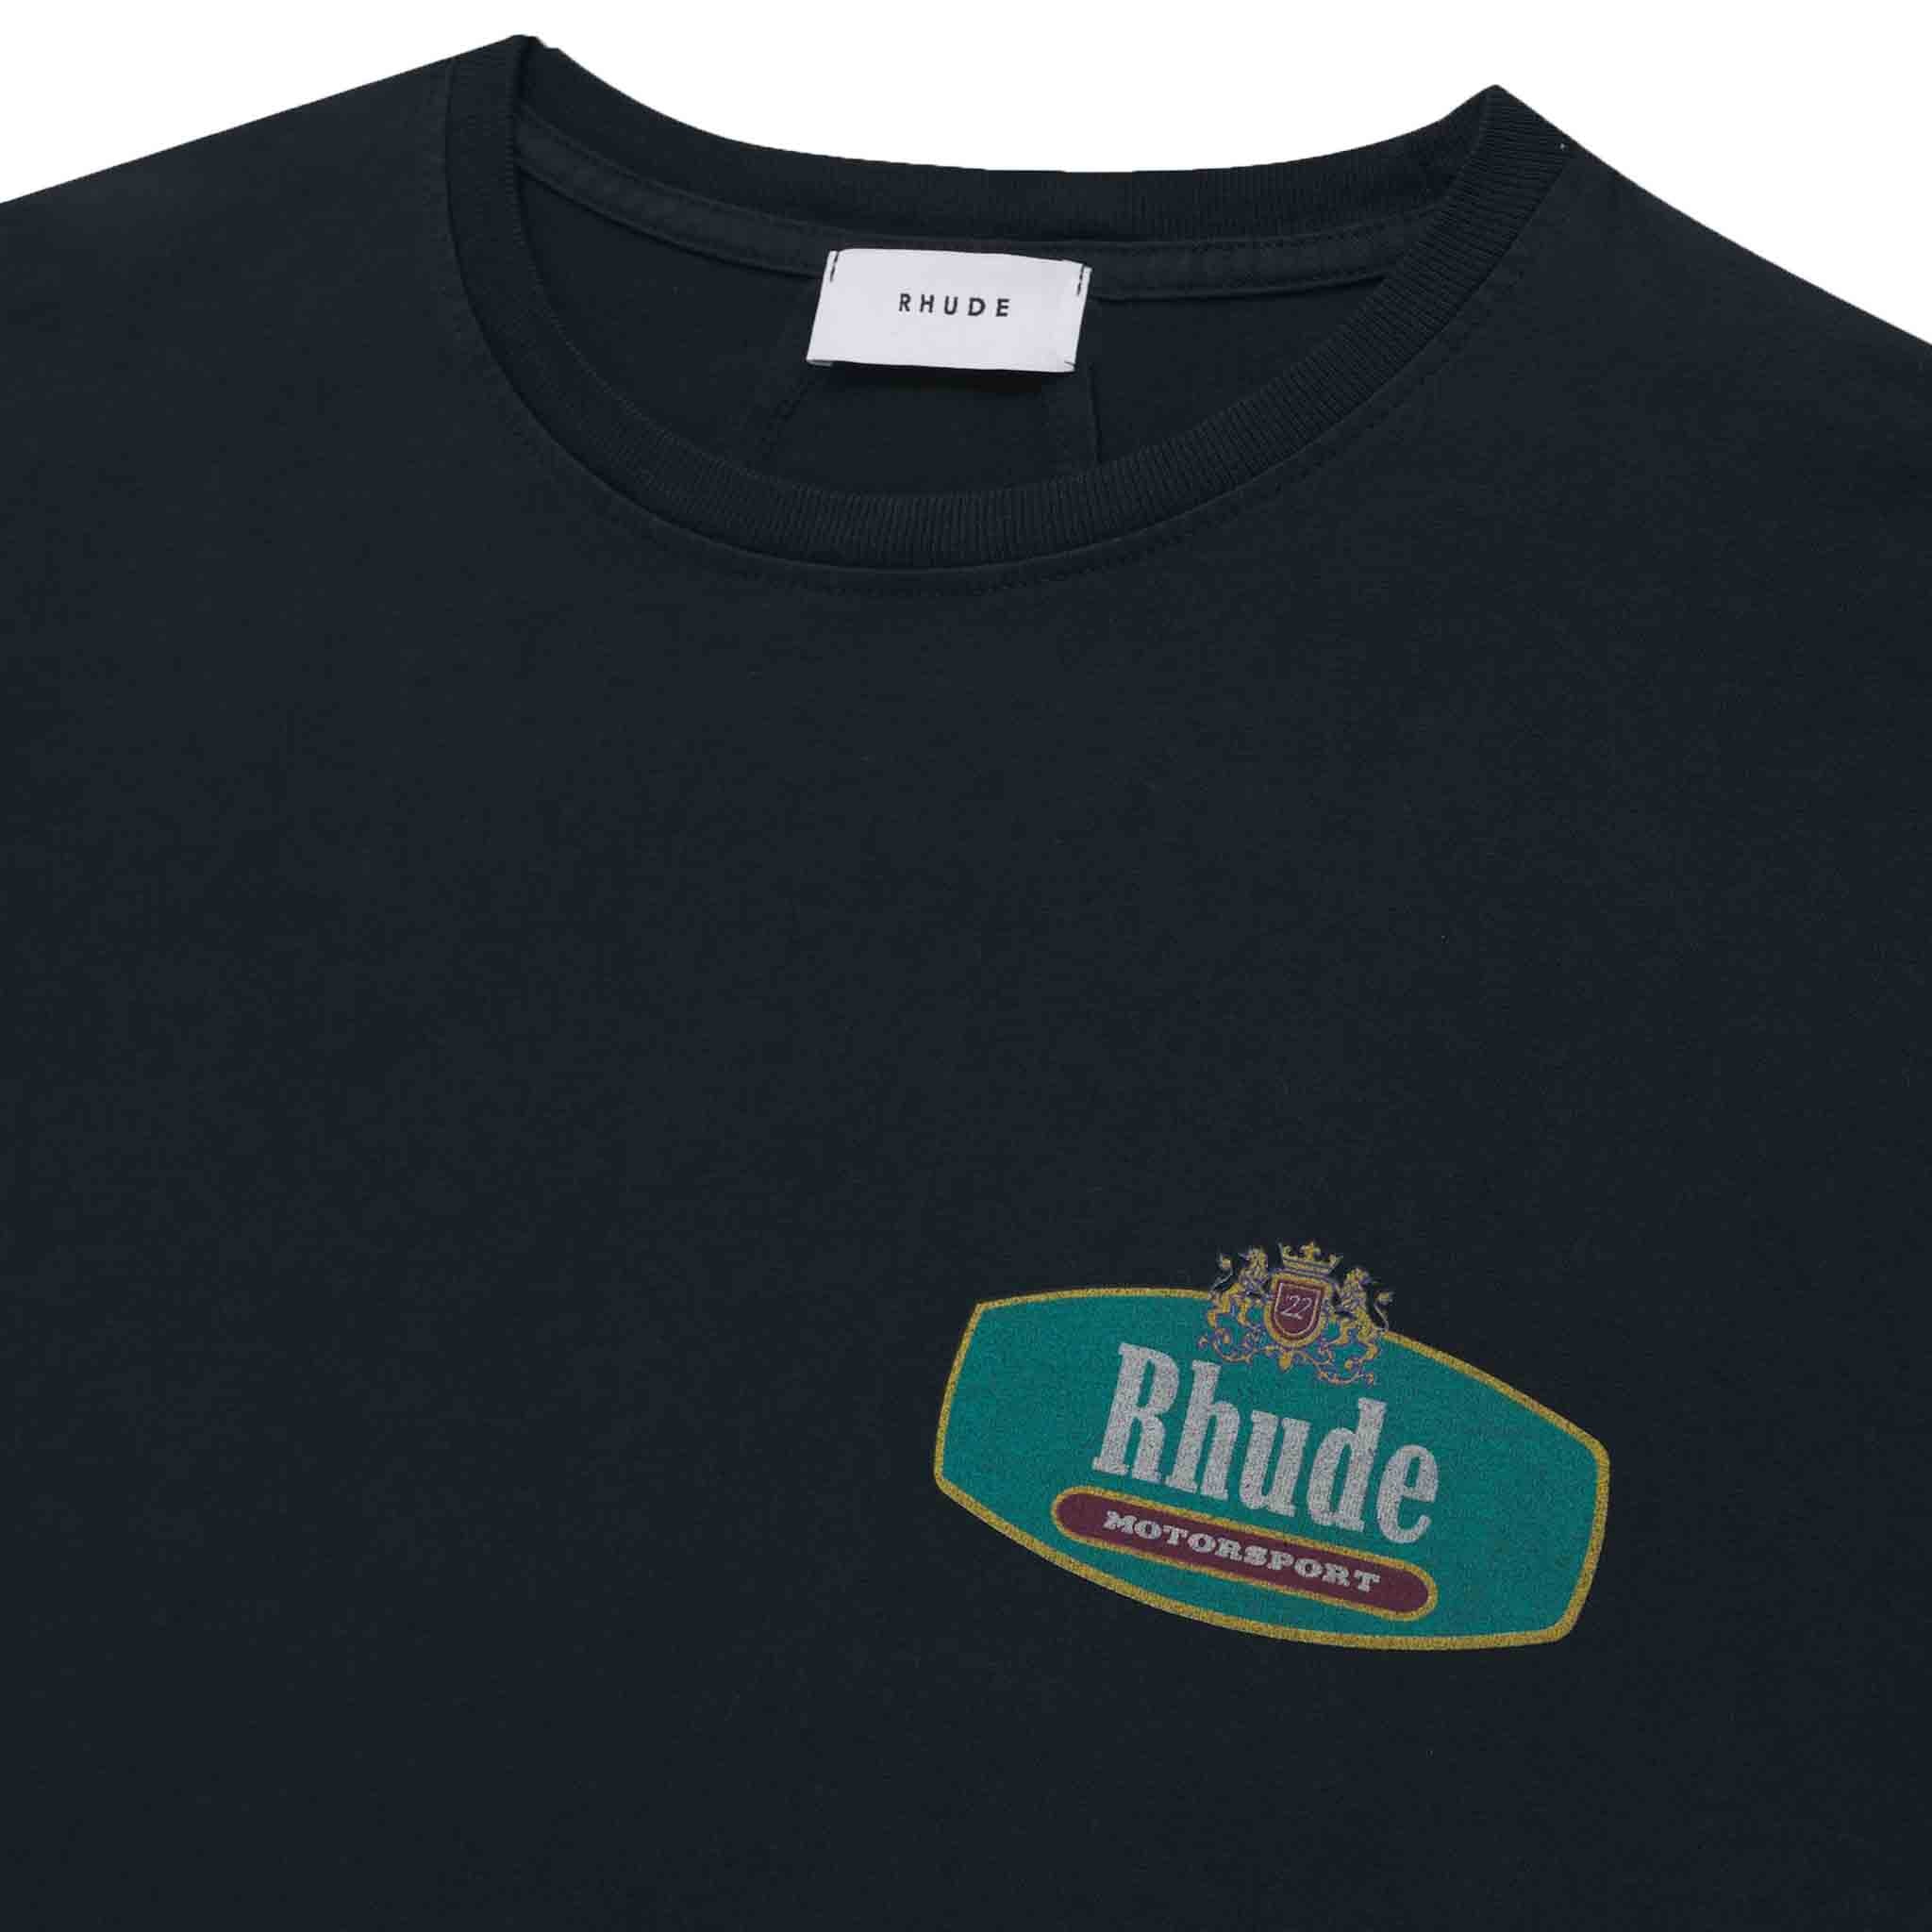 Rhude Racing Crest T-Shirt in Vintage Black